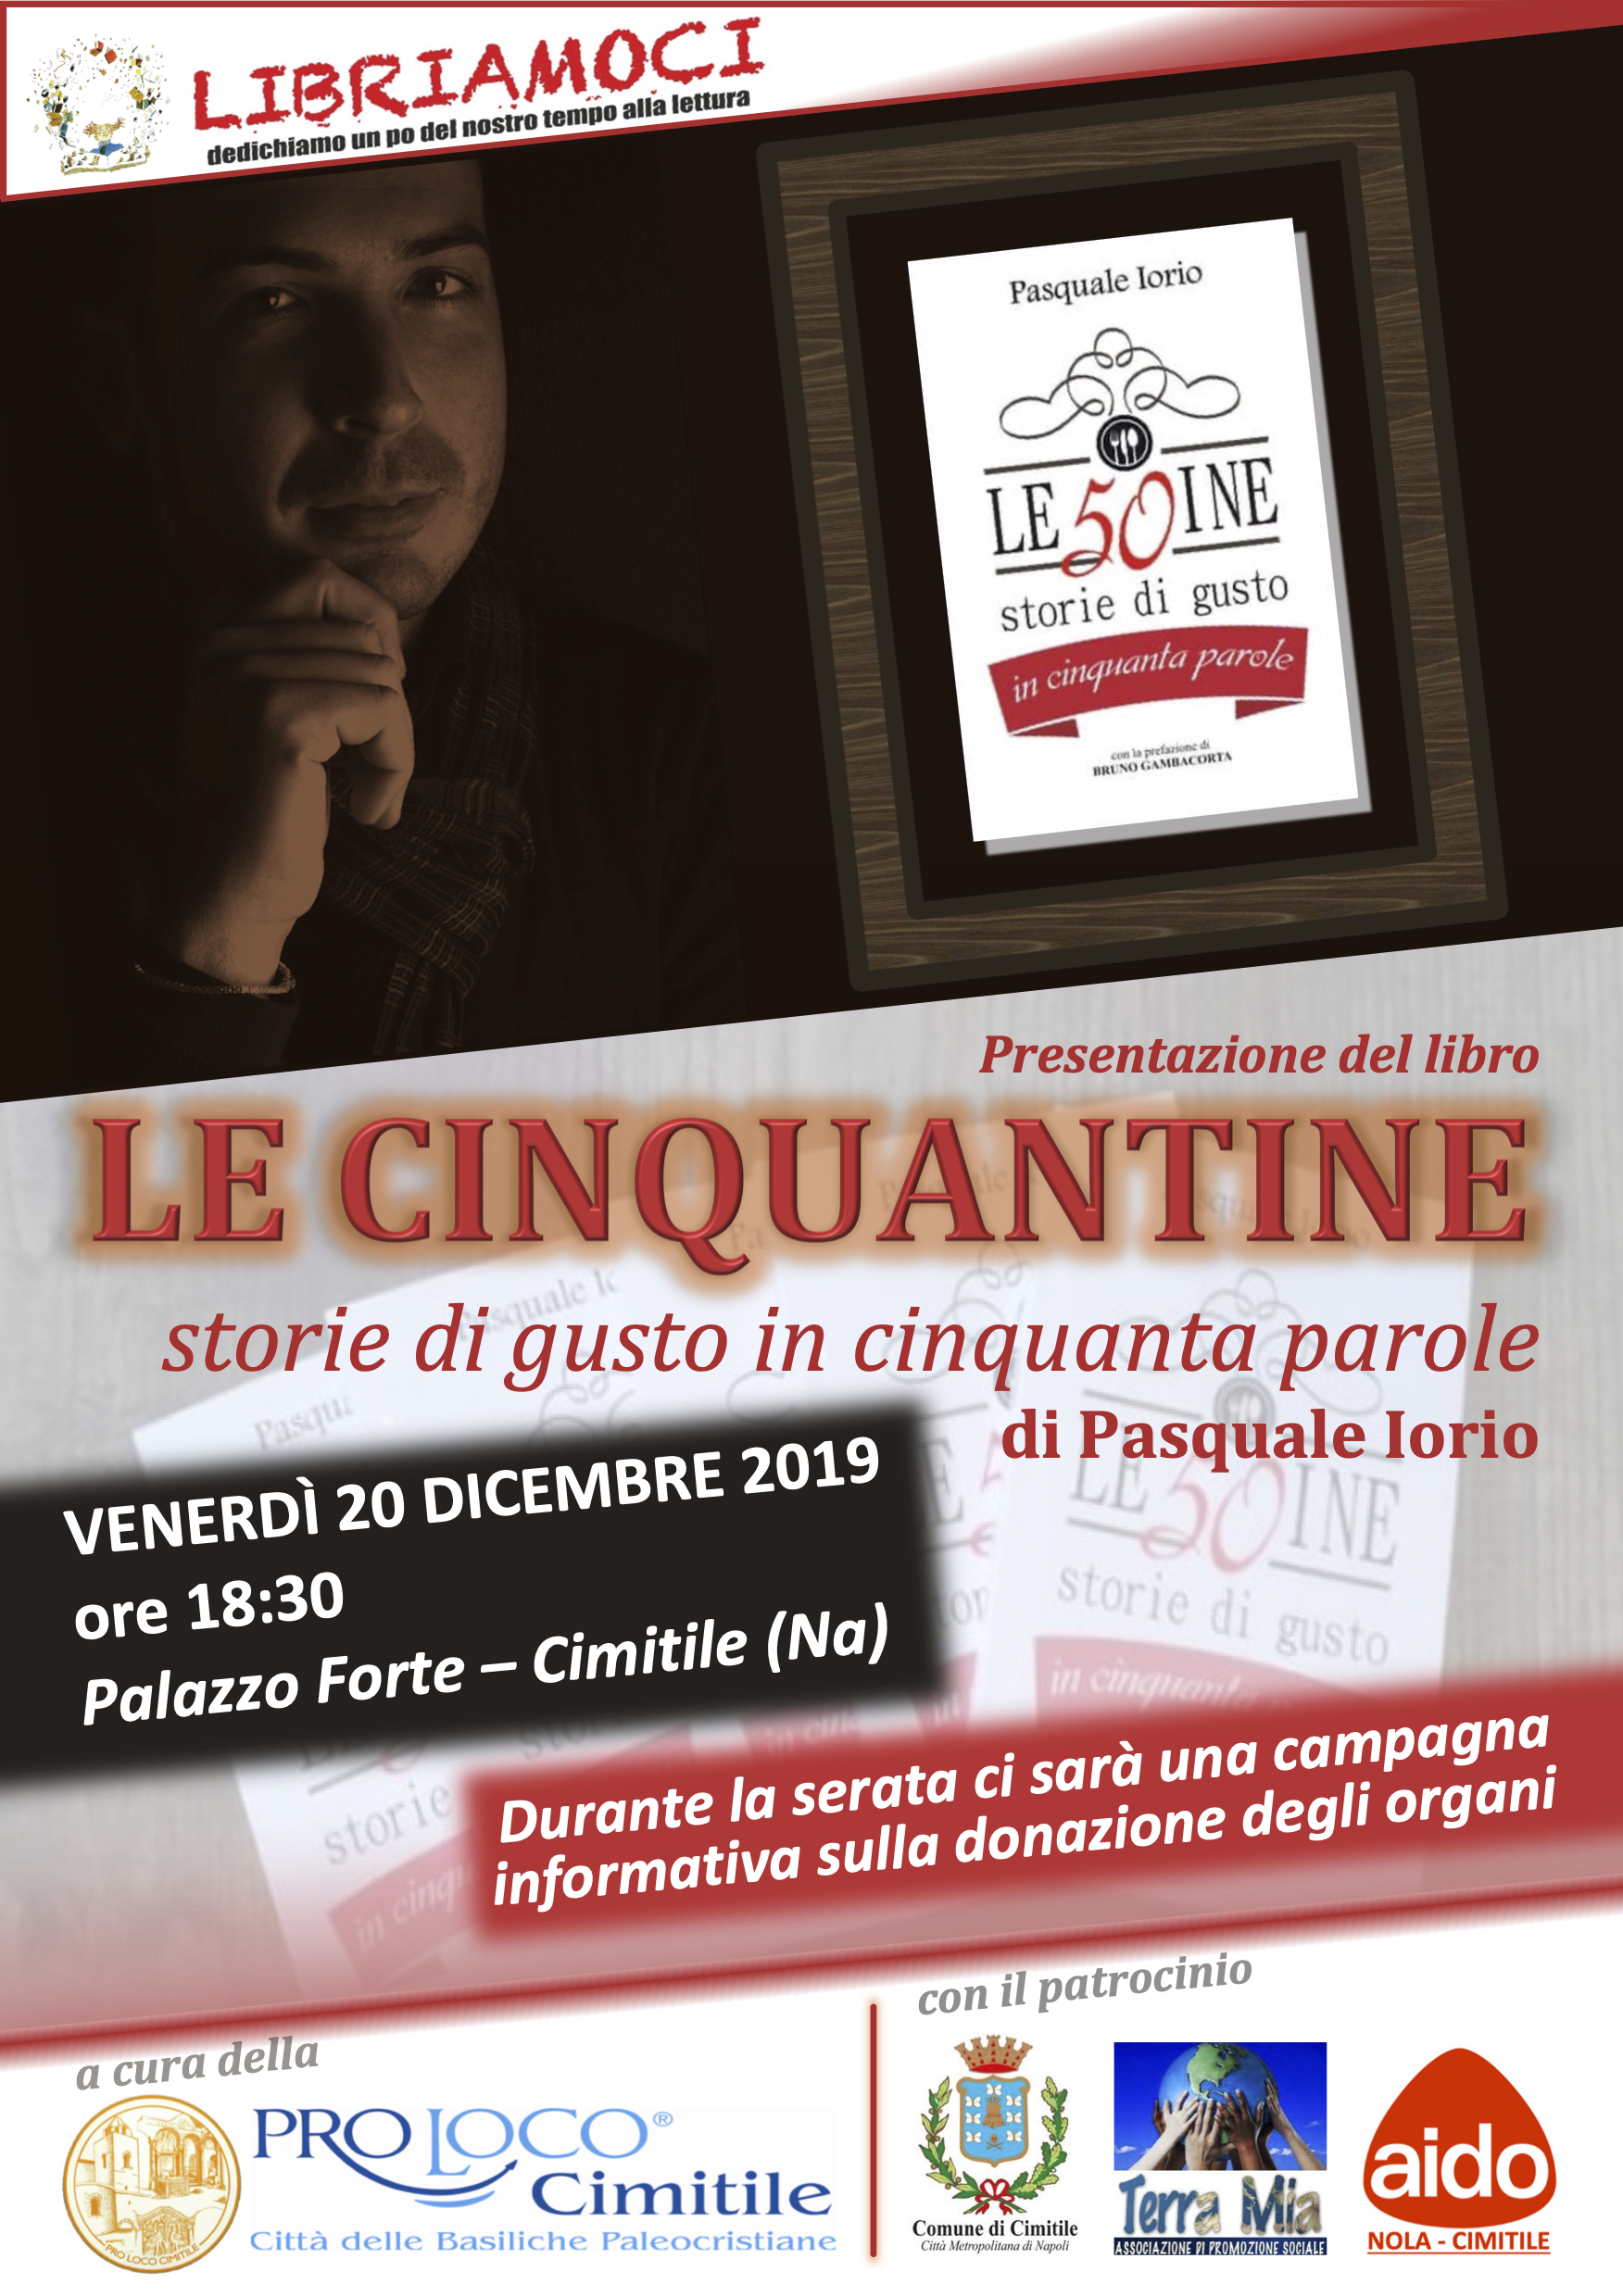 Le CINQUANTINE di Pasquale Iorio, food writer.